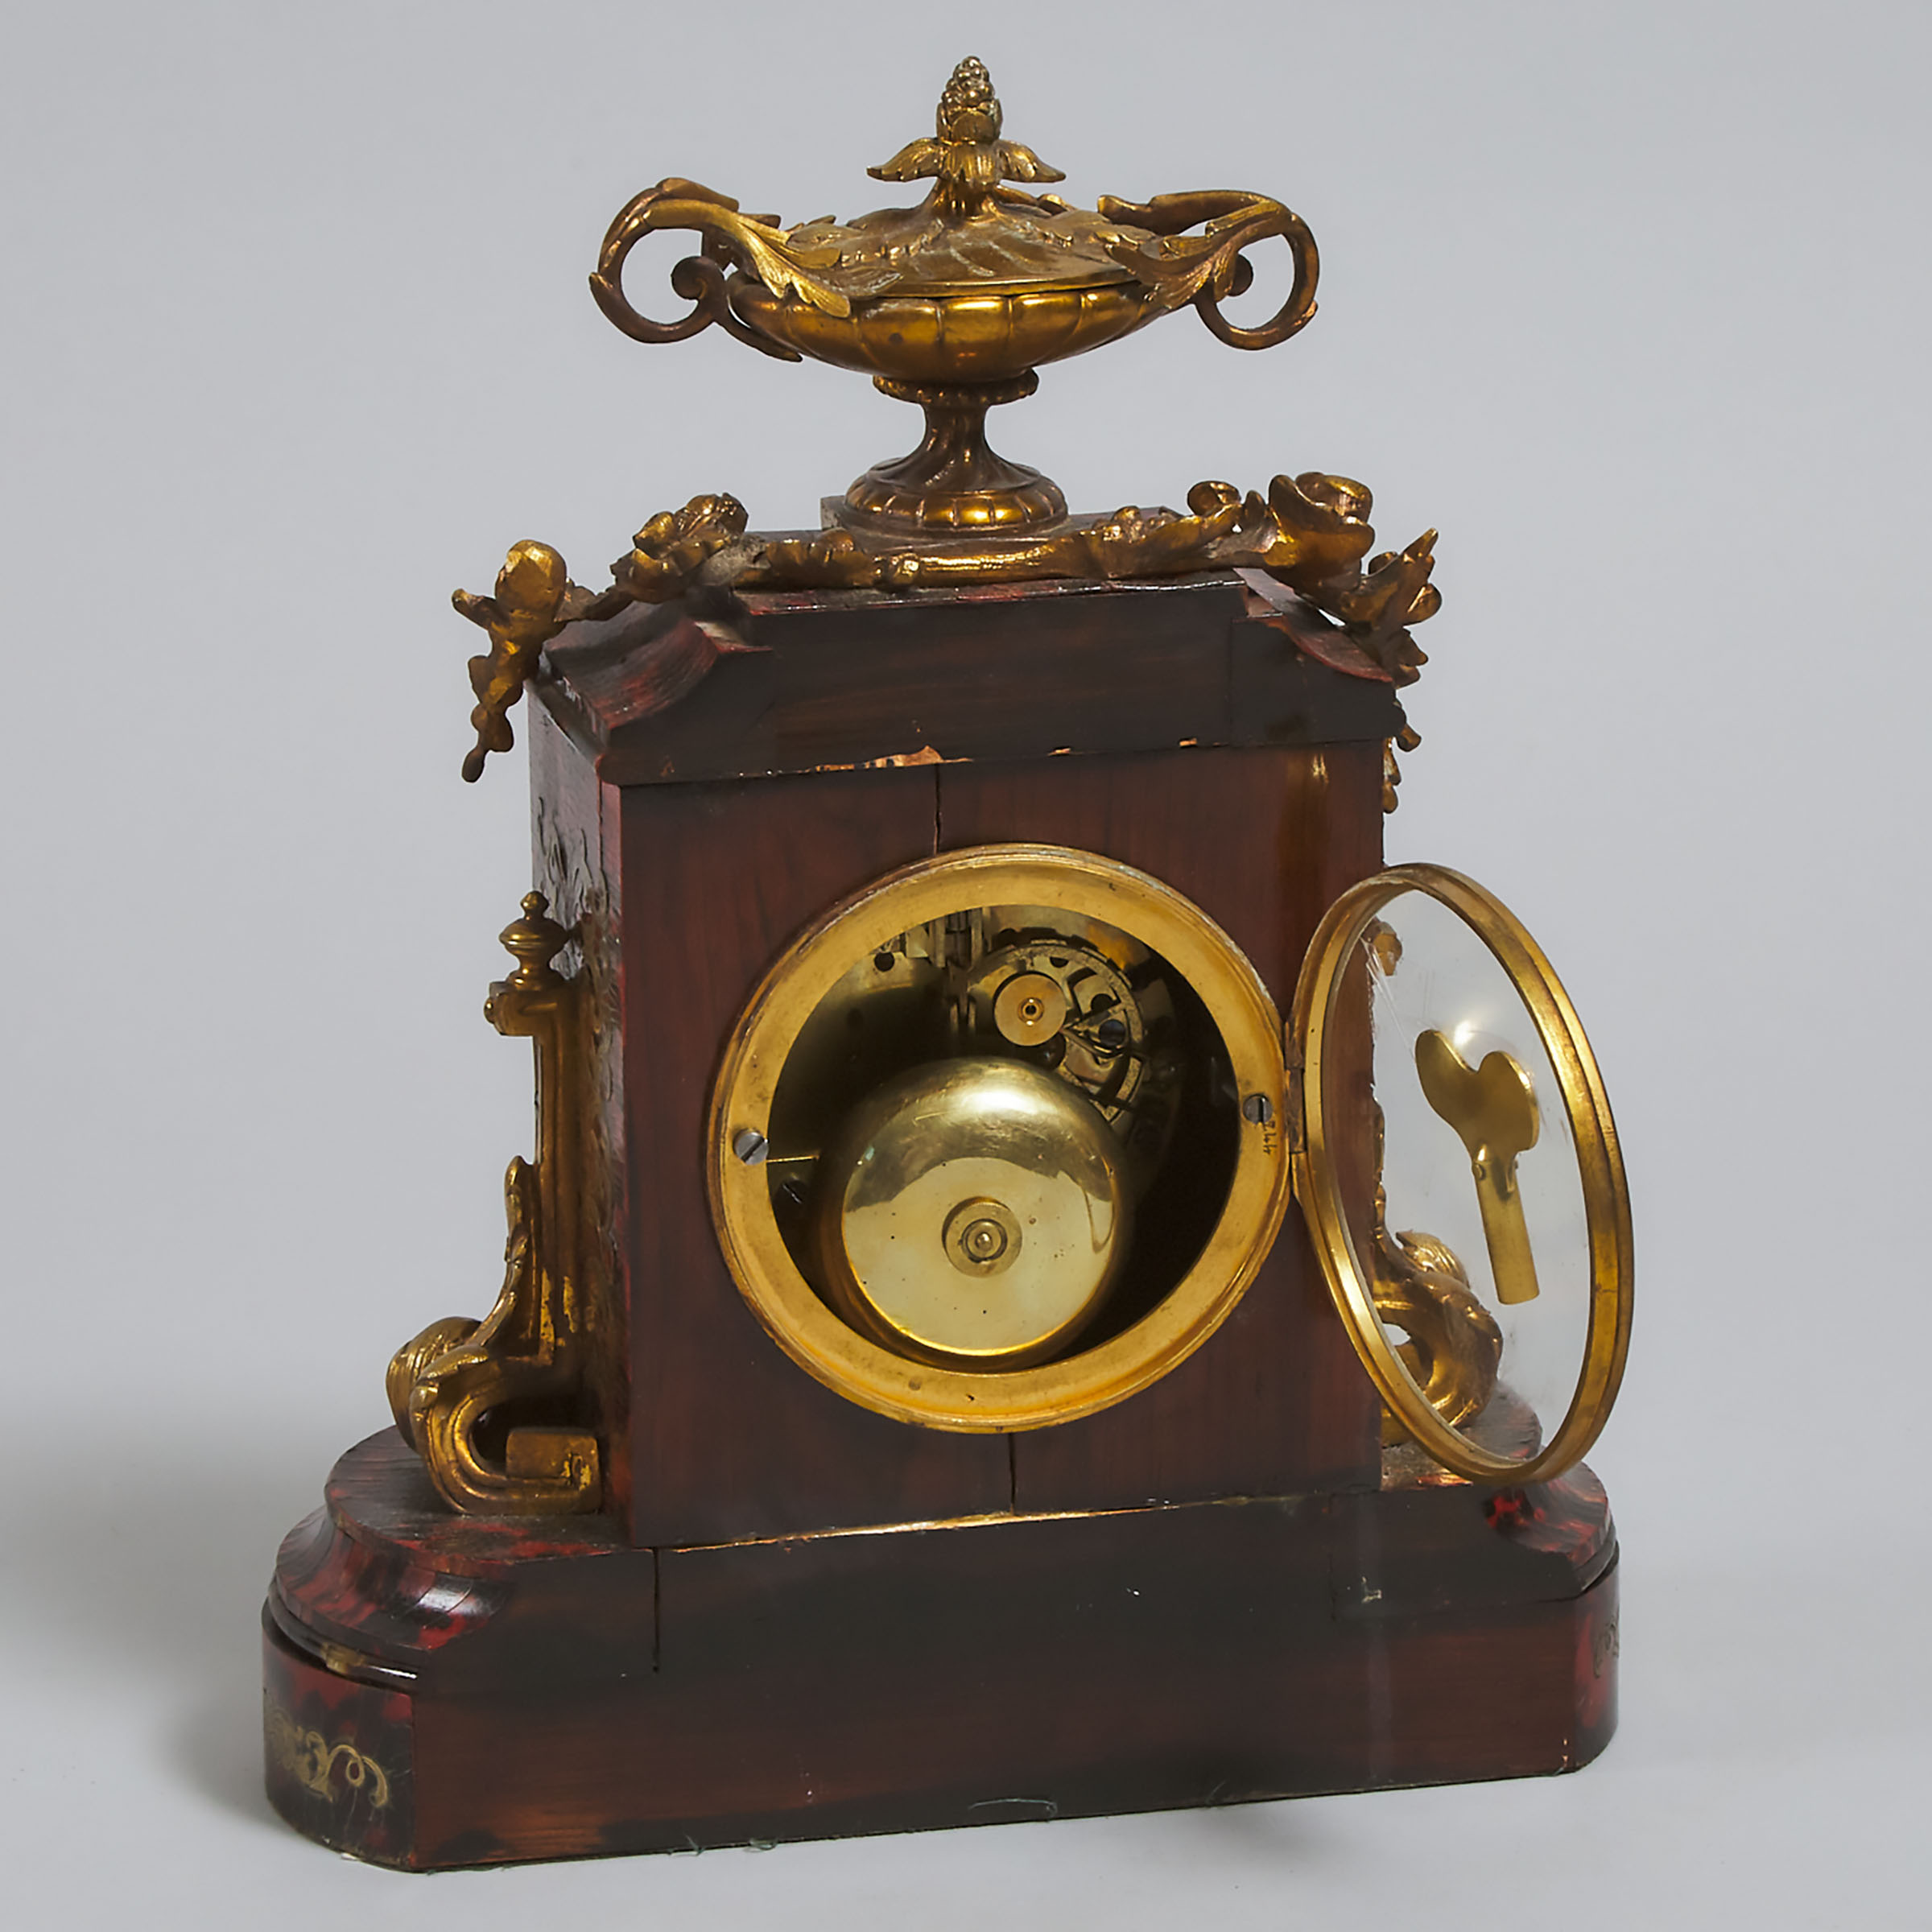 Petite French Ormolu Mounted 'Boulle' Work Mantle Clock, Nittor, à Paris, c.1860